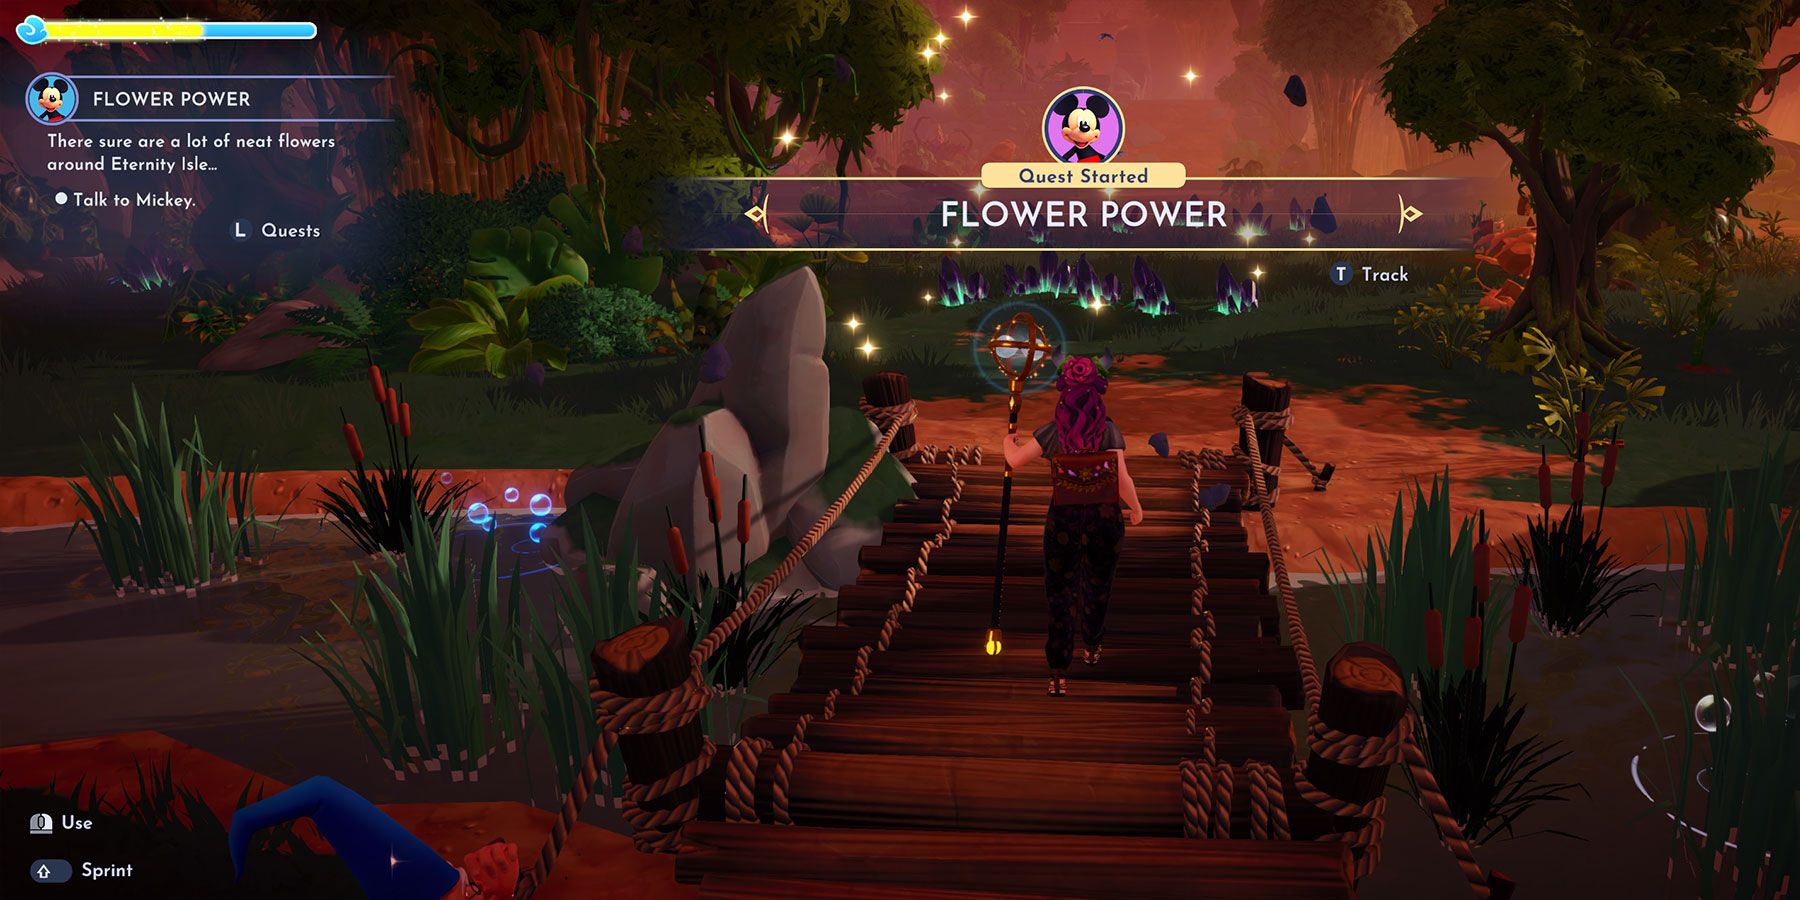 Starting the Flower Power quest in Disney Dreamlight Valley